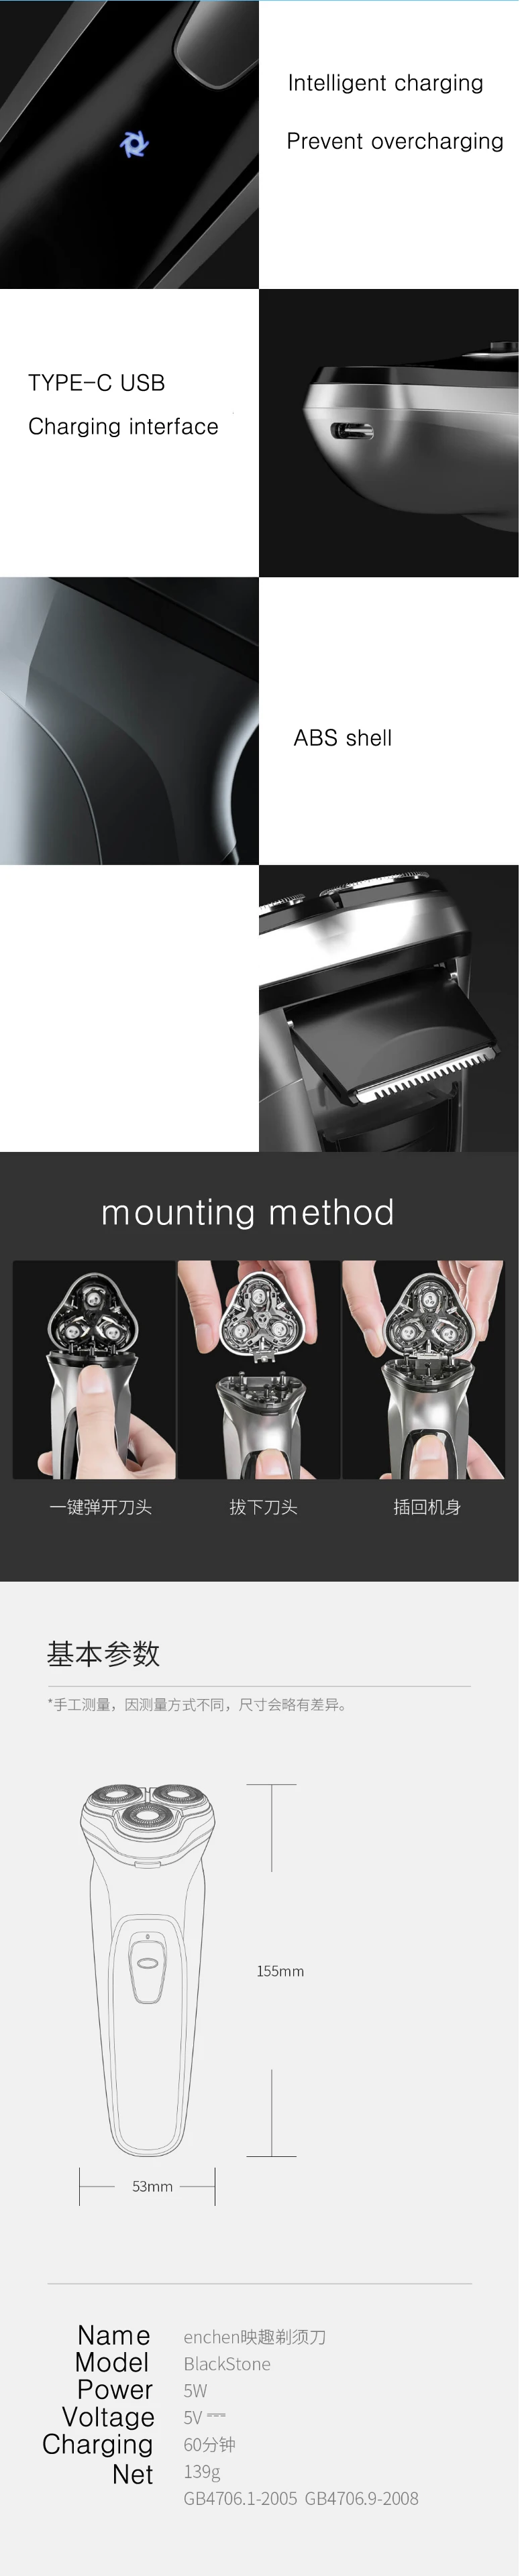 Xiaomi blackstone enchen электробритва Мужская моющаяся USB перезаряжаемая Беспроводная 3D умная бритва для бритья бороды